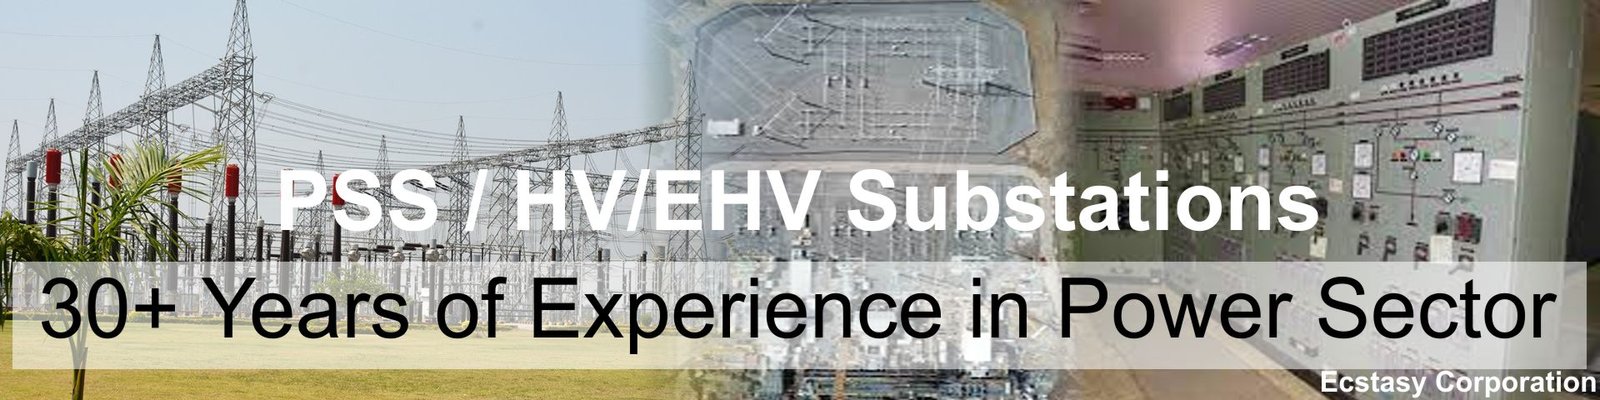 PSS HV/EHV Substation